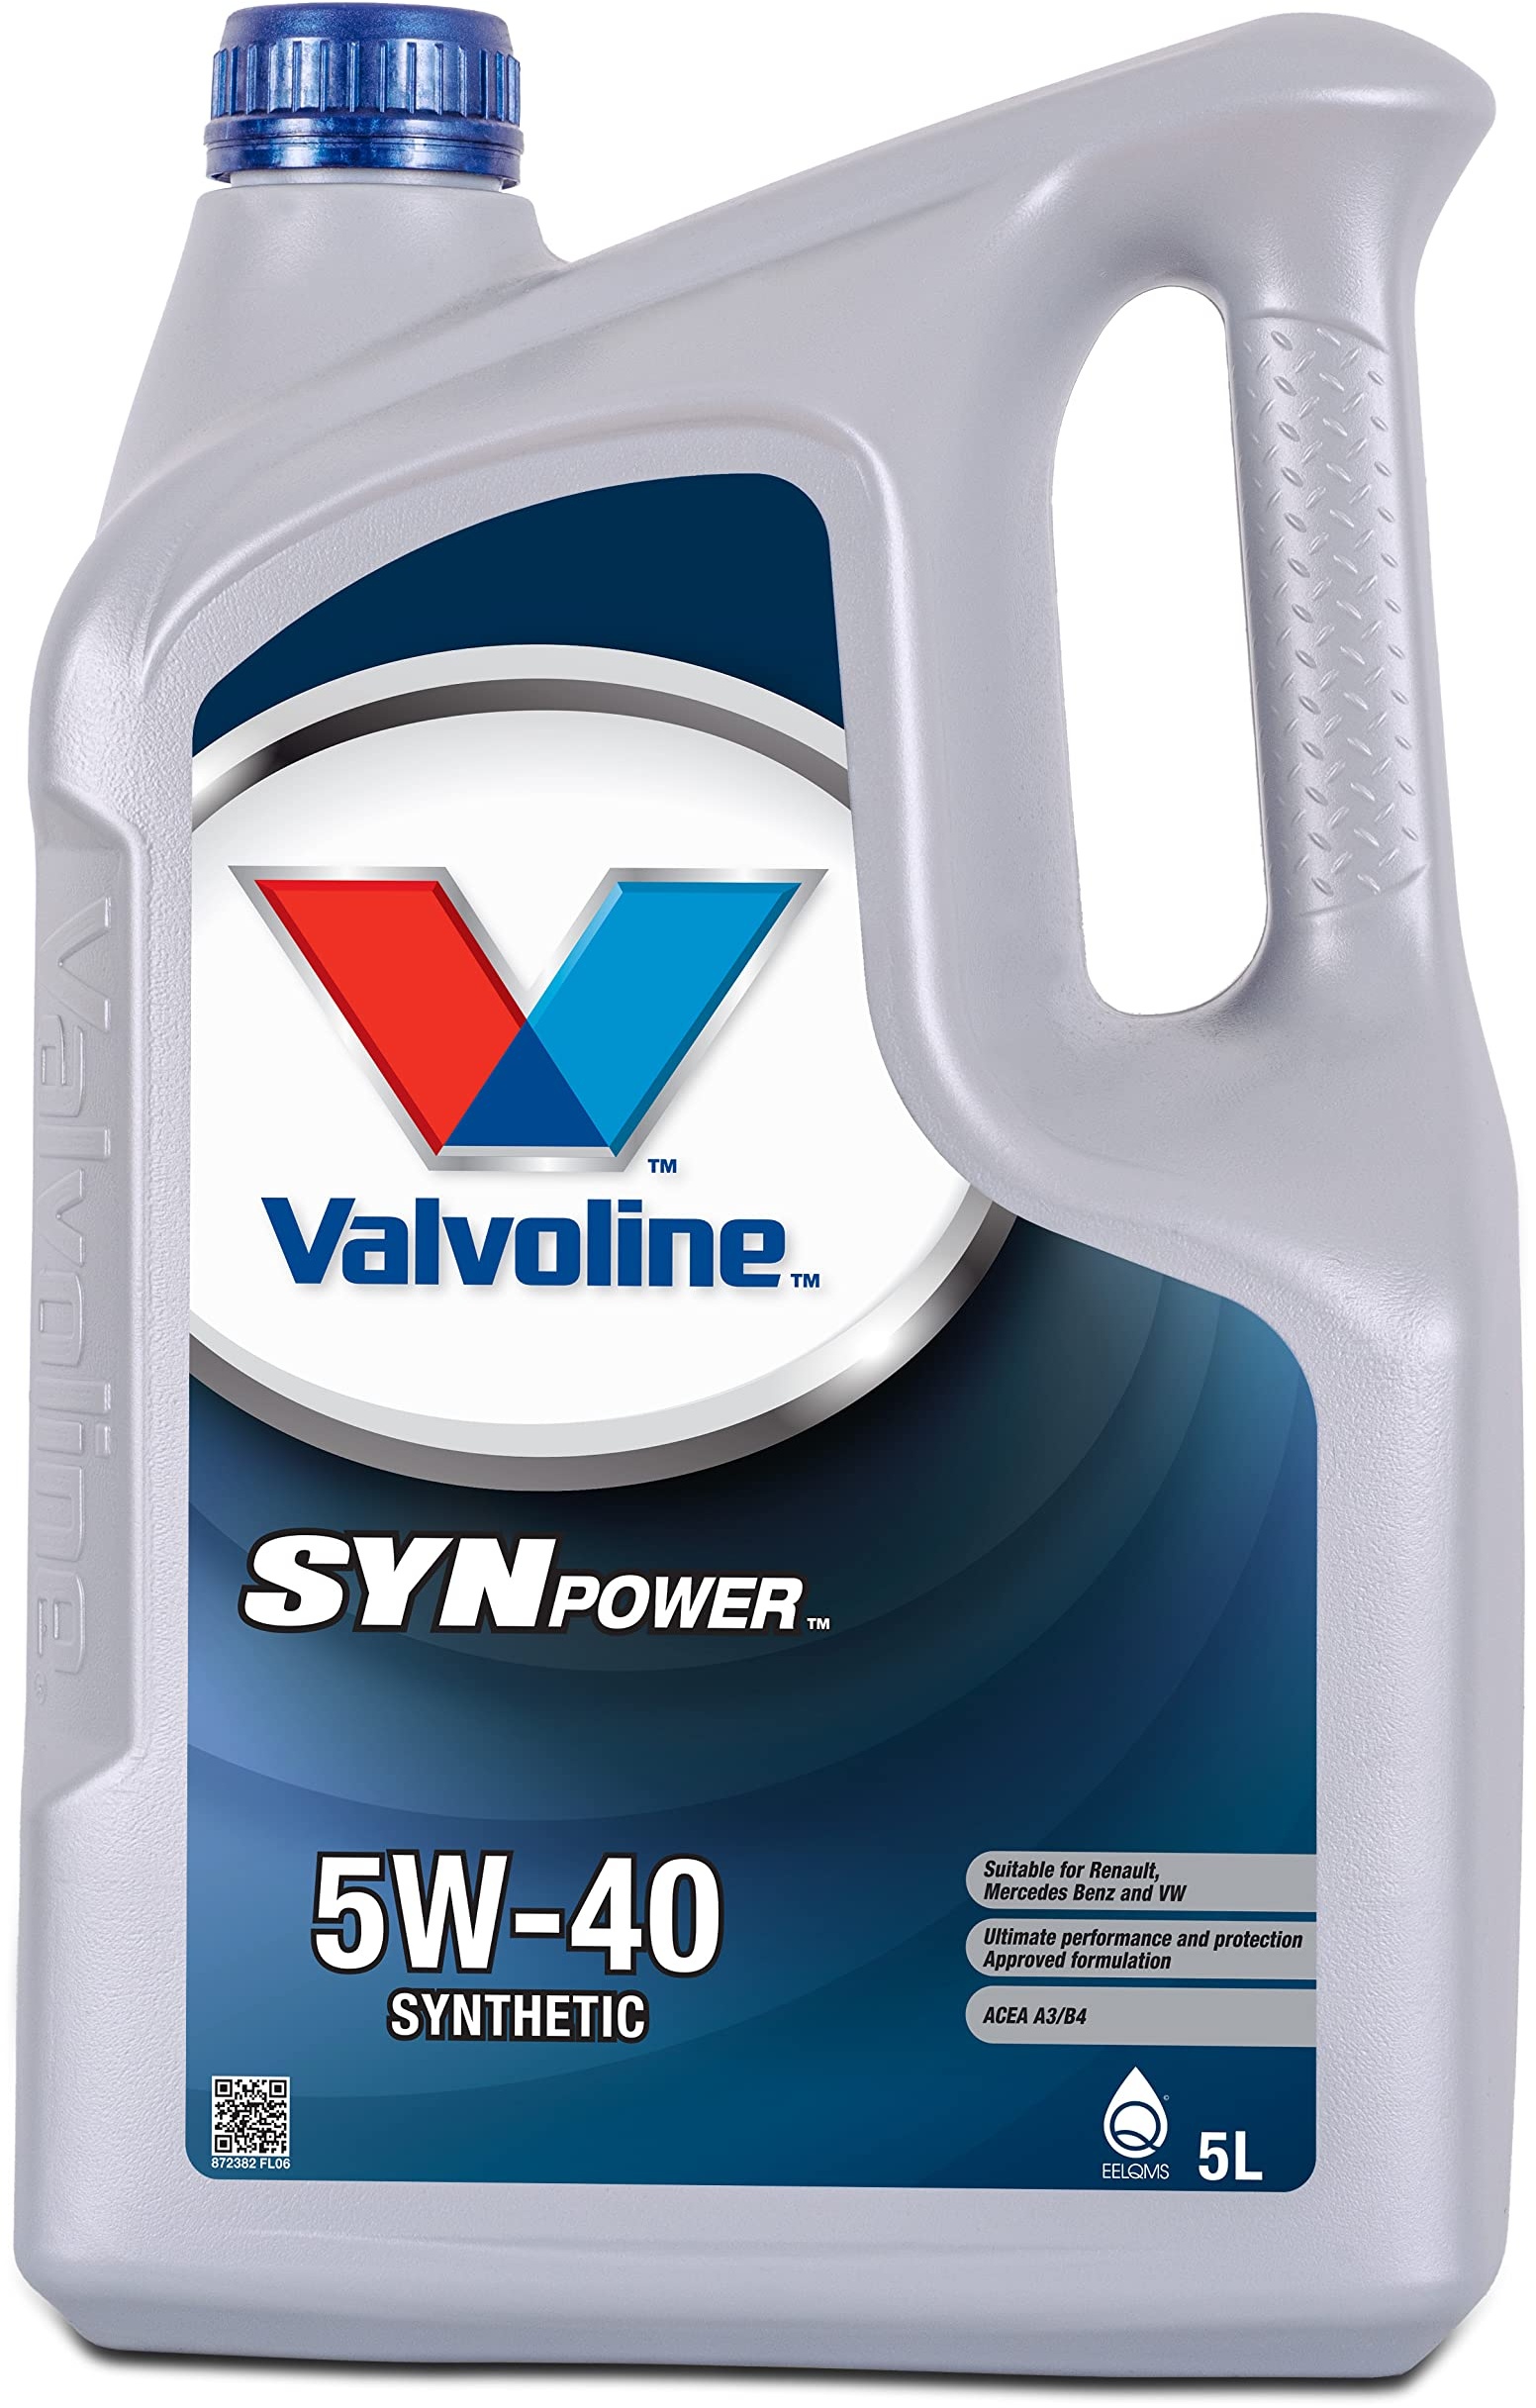 Valvoline SynPower 5W-40, 5L